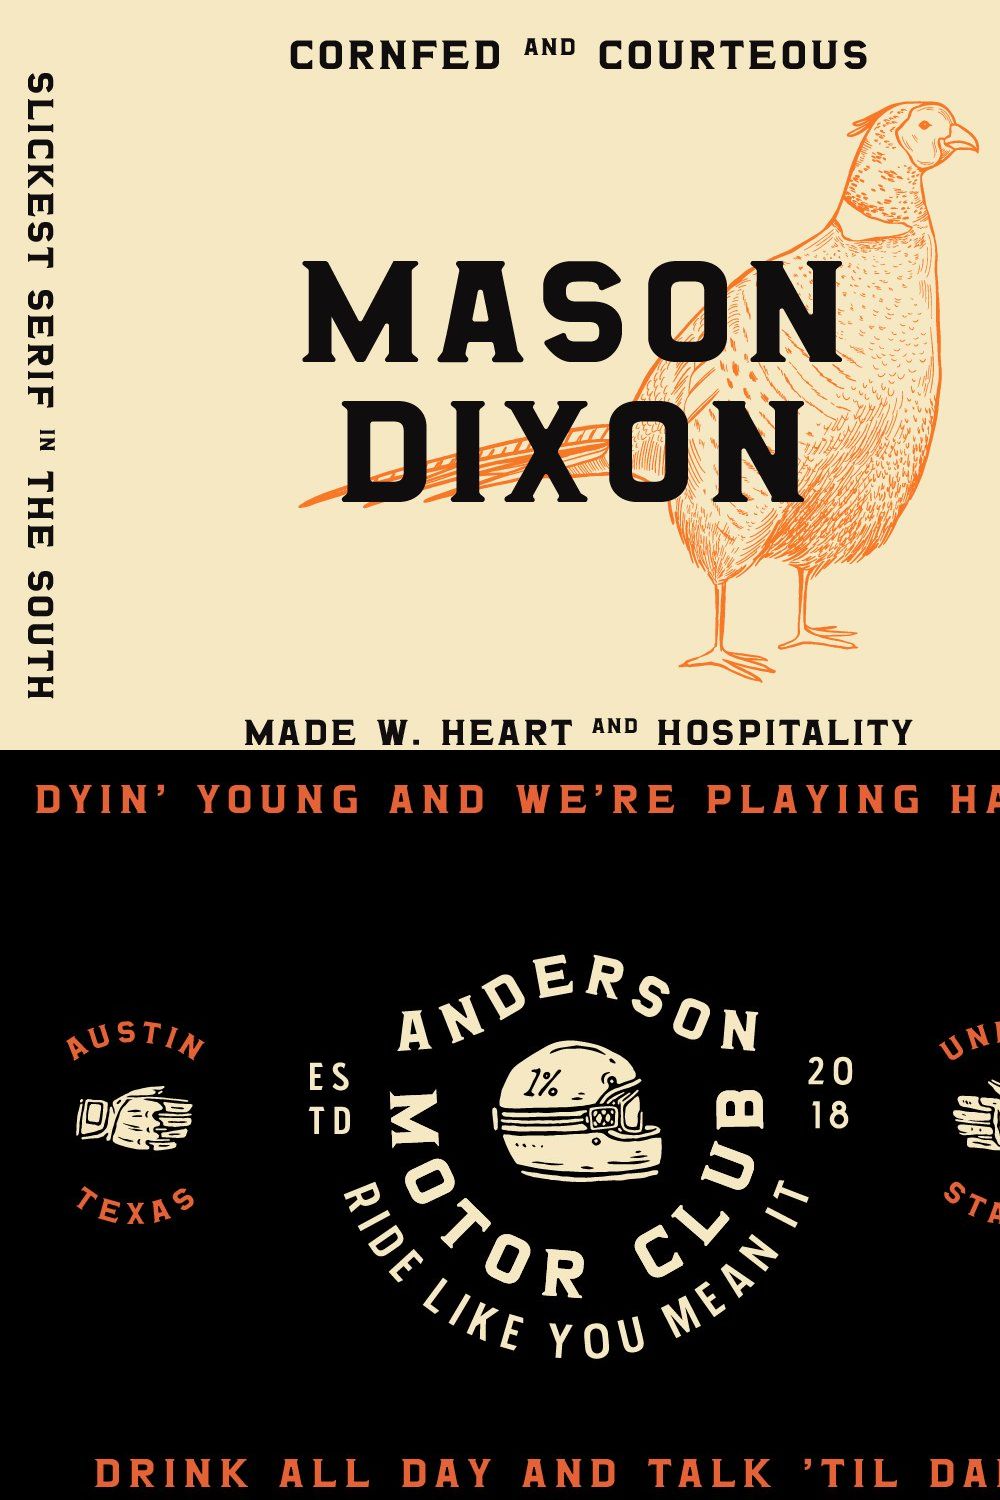 Mason Dixon - Southern Display Font pinterest preview image.